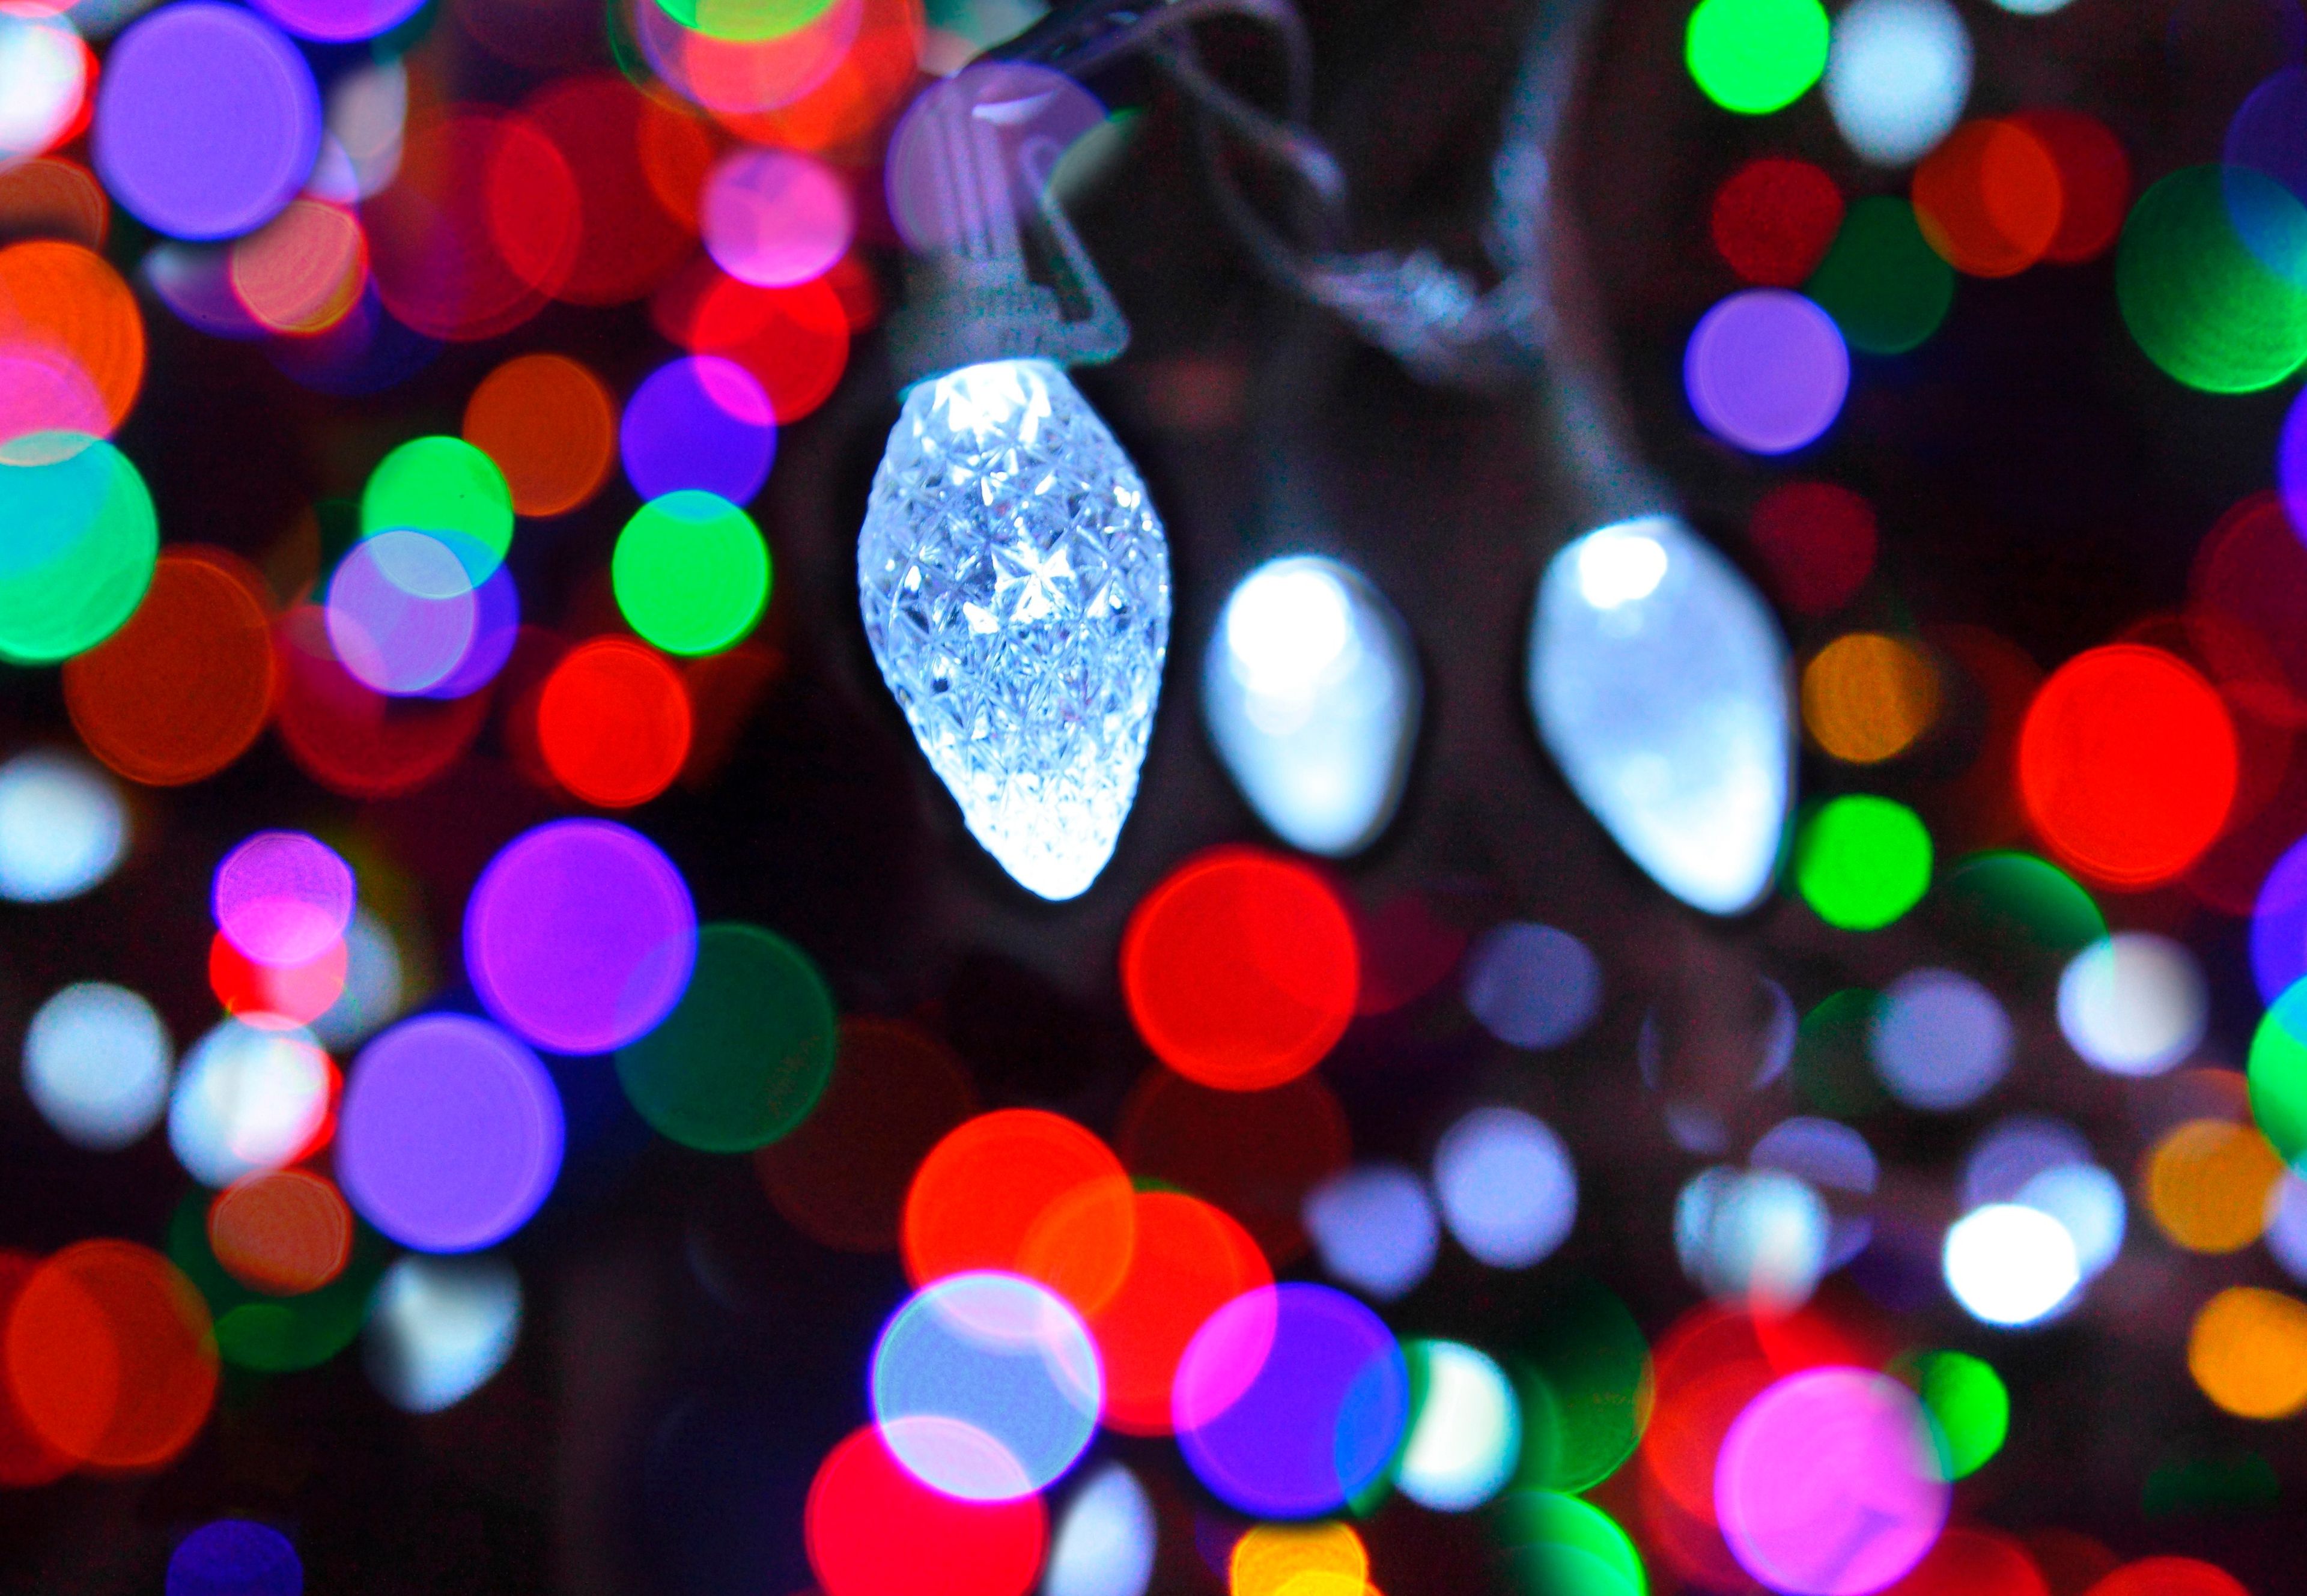 An image of colored Christmas lights.